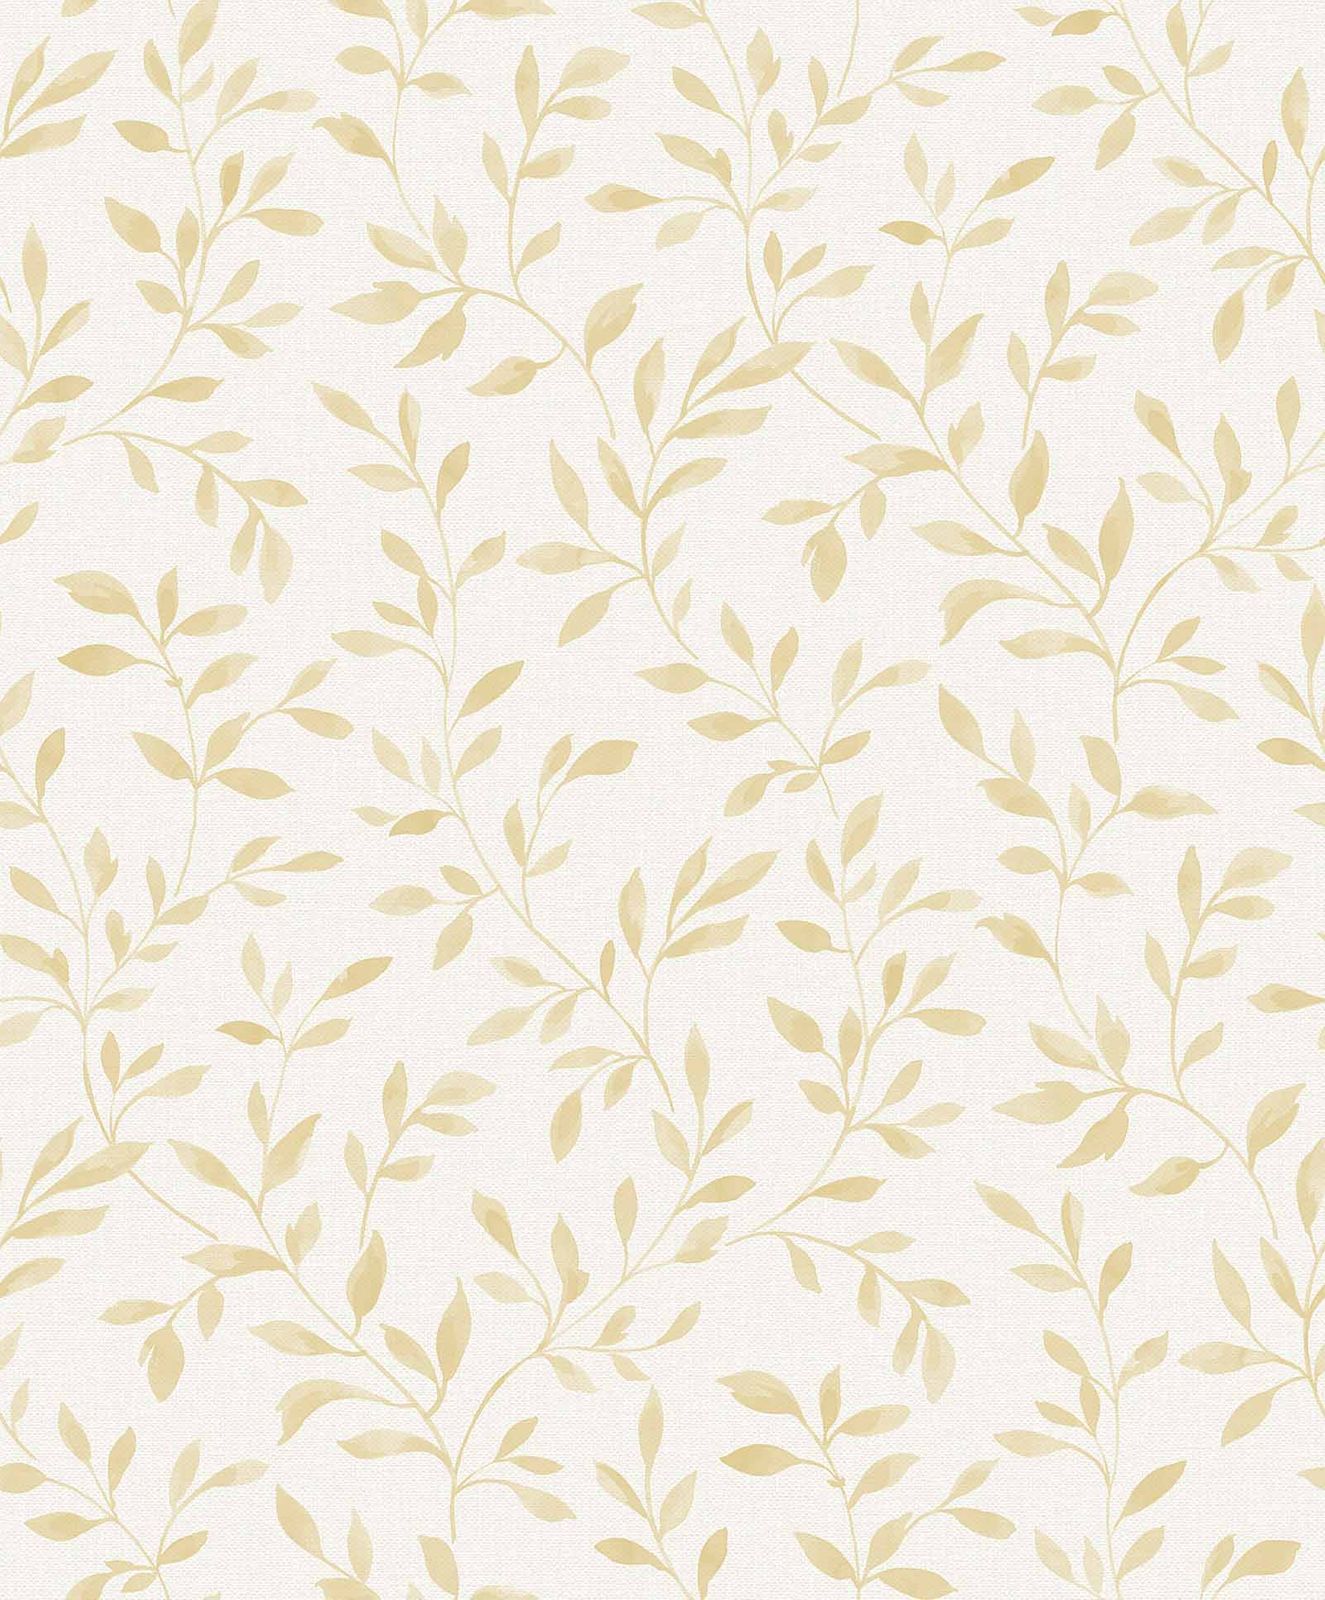 Wallpaper Vinyl Leaves Floral Grey White Yellow Sn3312 - Tapete Blätter Blau , HD Wallpaper & Backgrounds